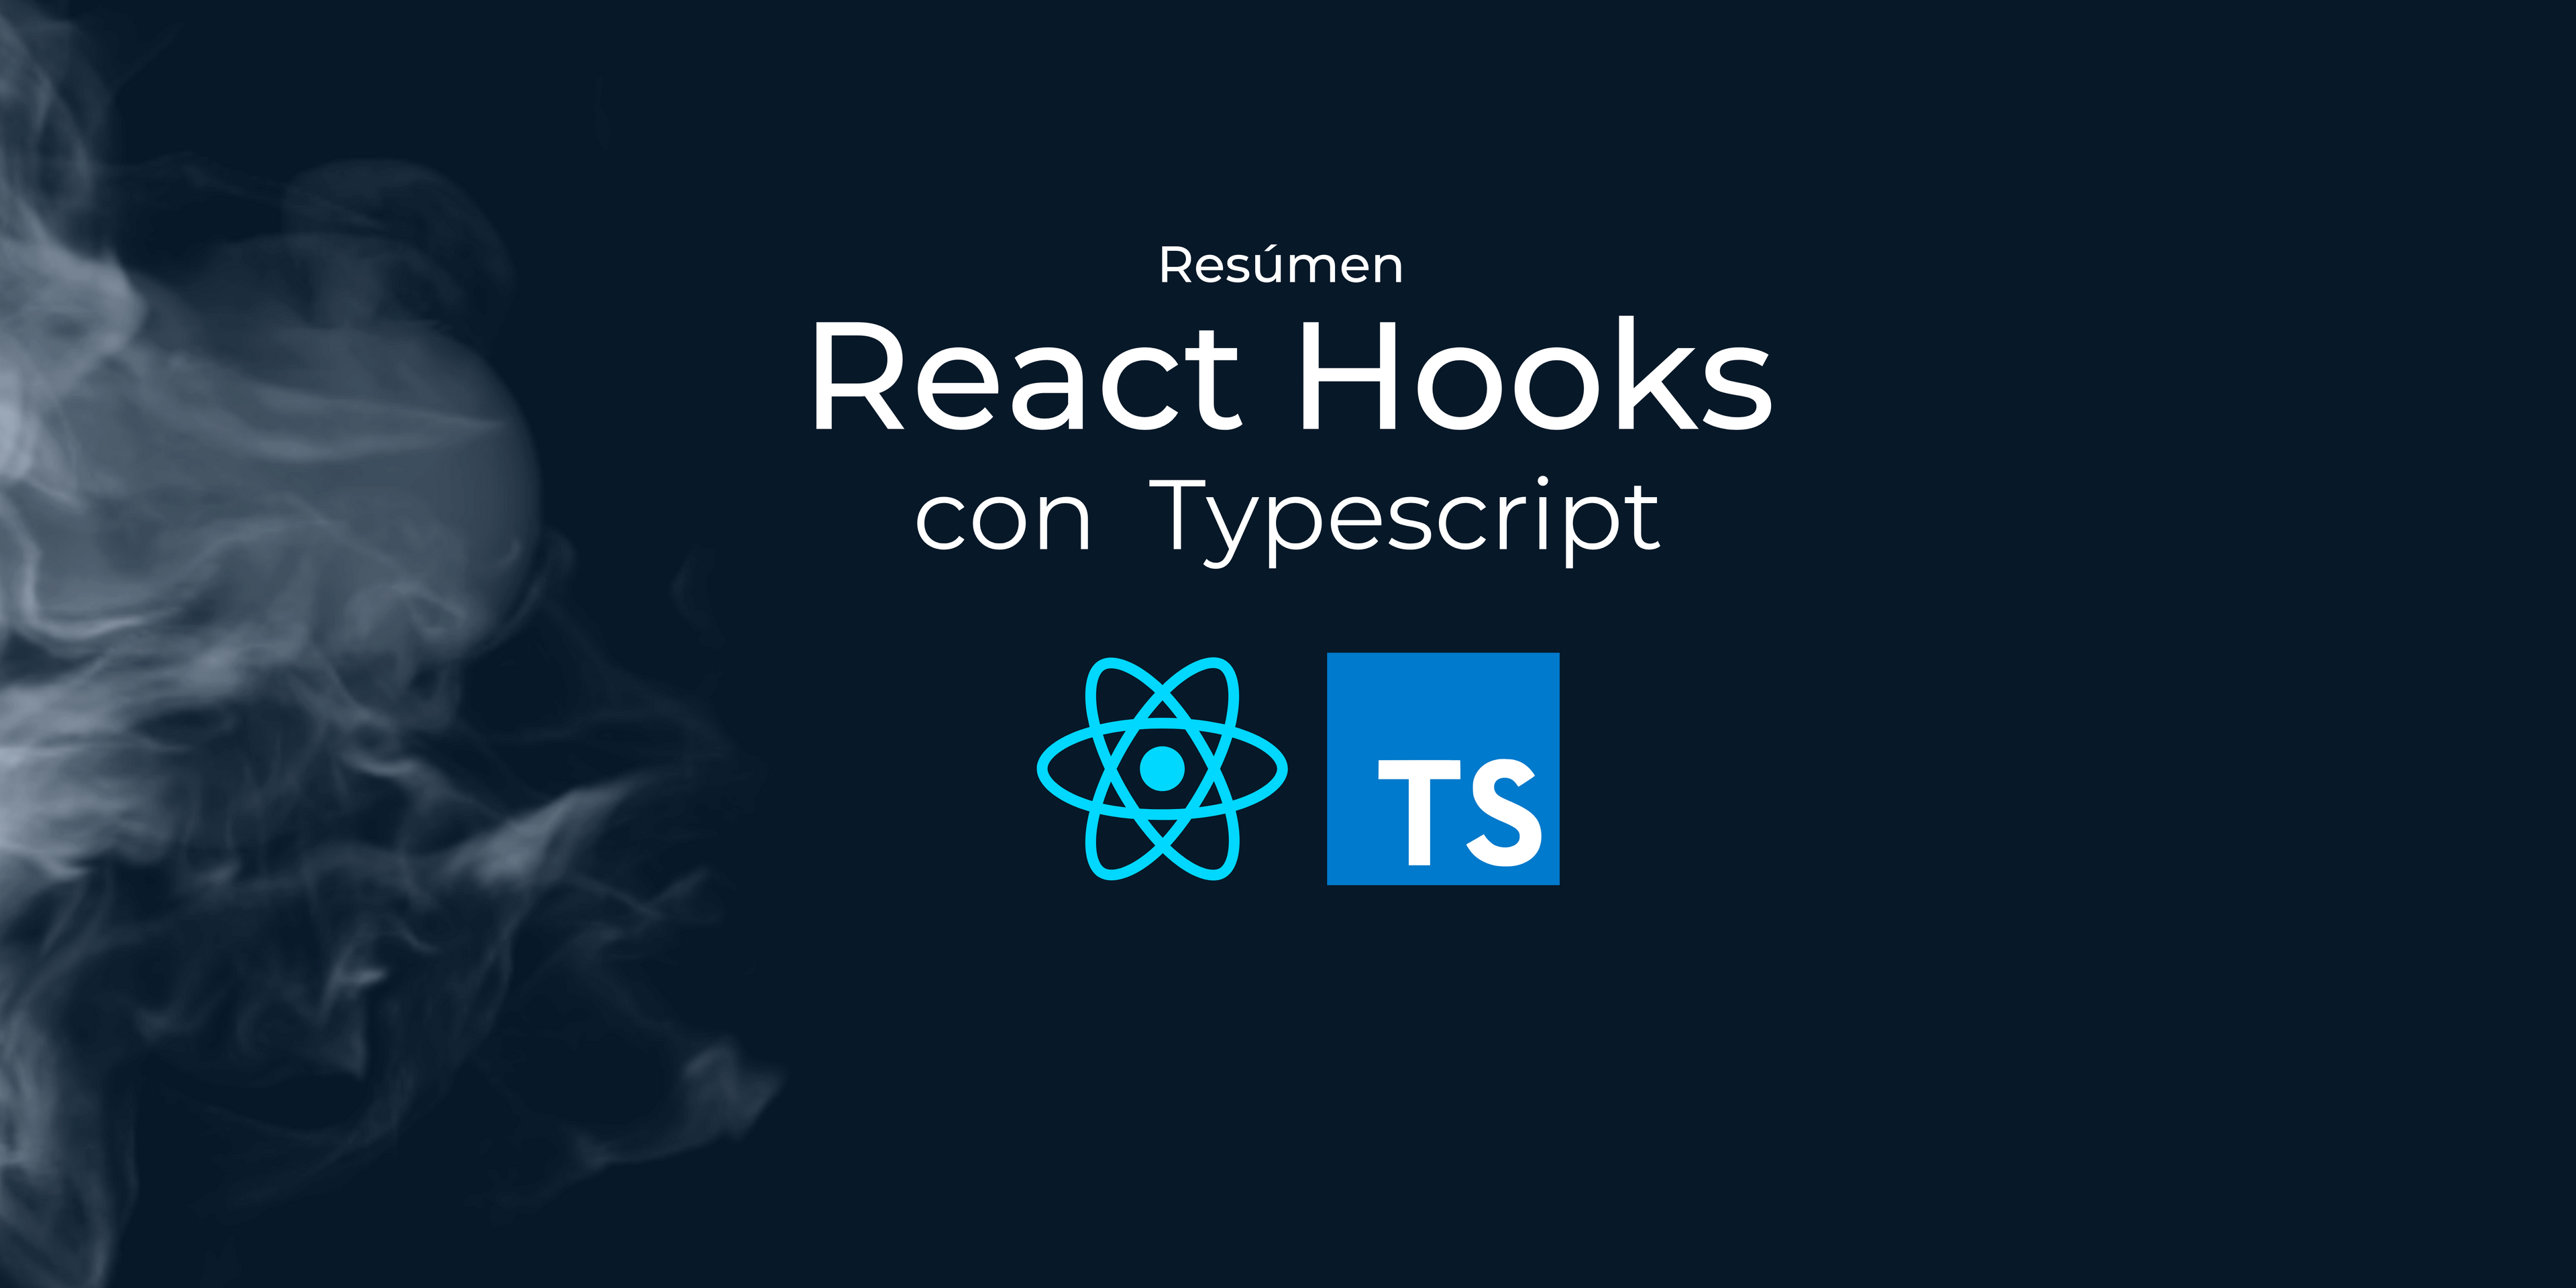 Resúmen de React Hooks con Typescript